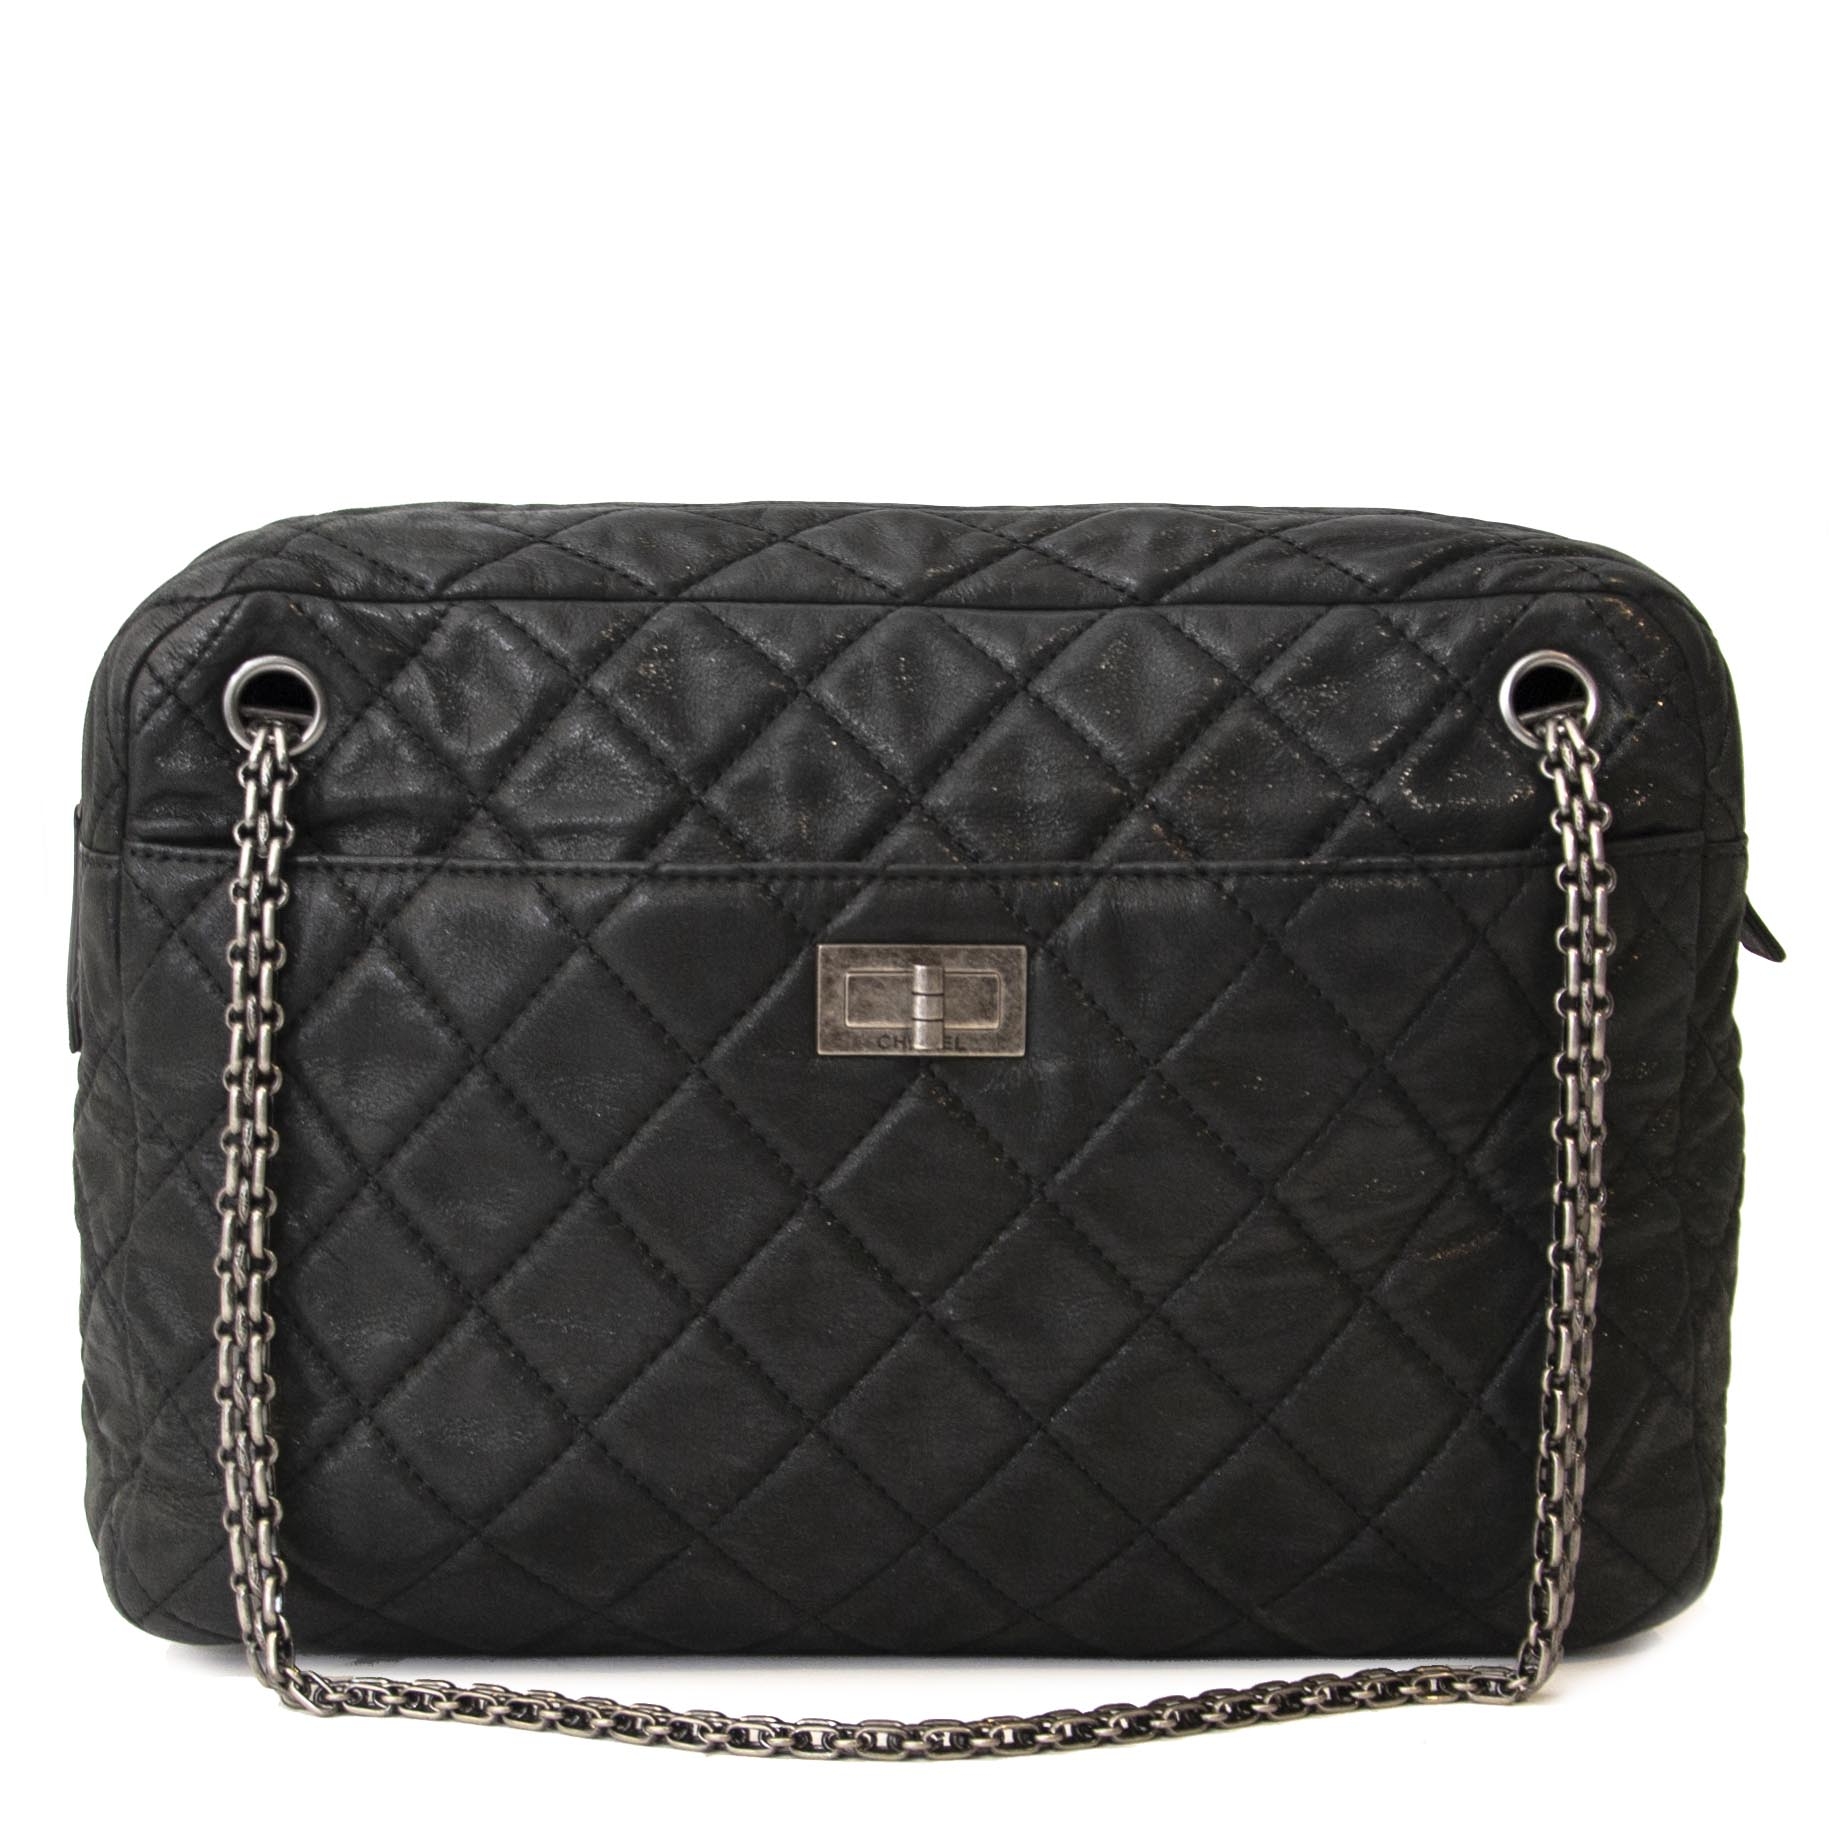 Chanel Reissue Black Quilted Iridescent Calfskin Camera Bag